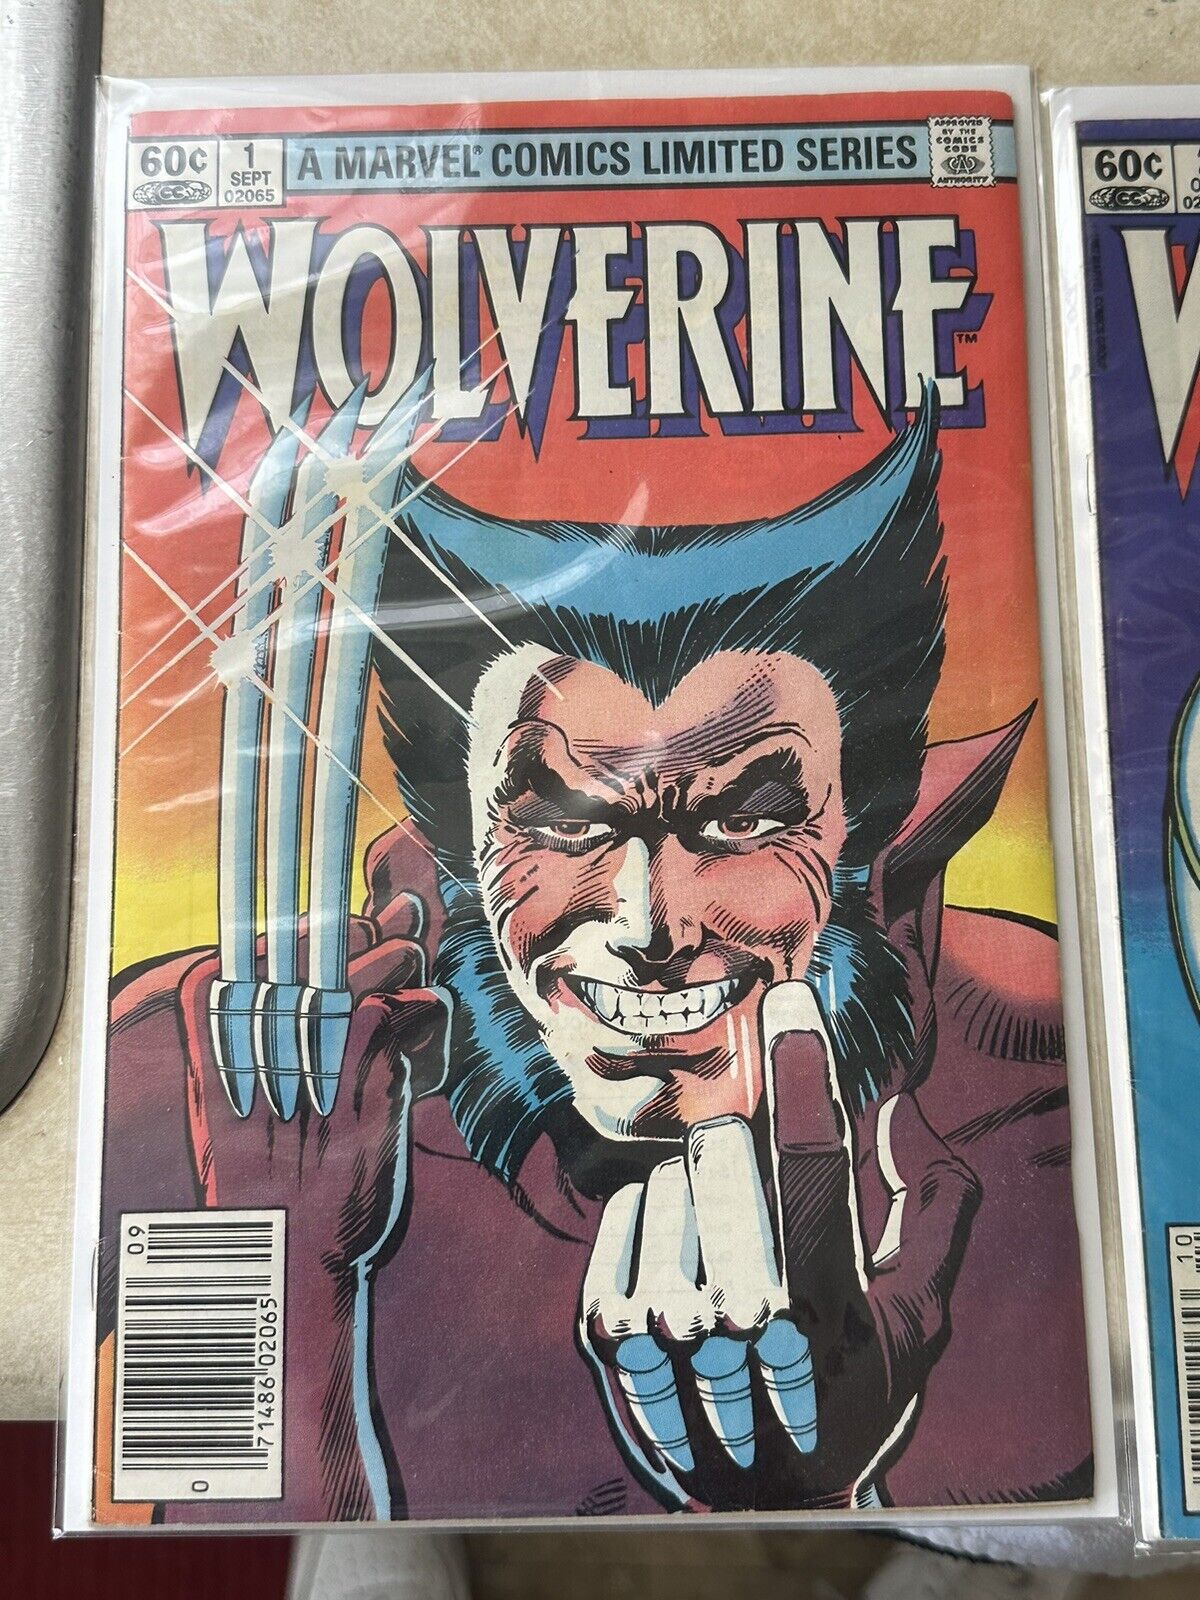 WOLVERINE #1-4 Full Run Limited Series 1982 Marvel Comics 1 2 3 4 Frank Miller